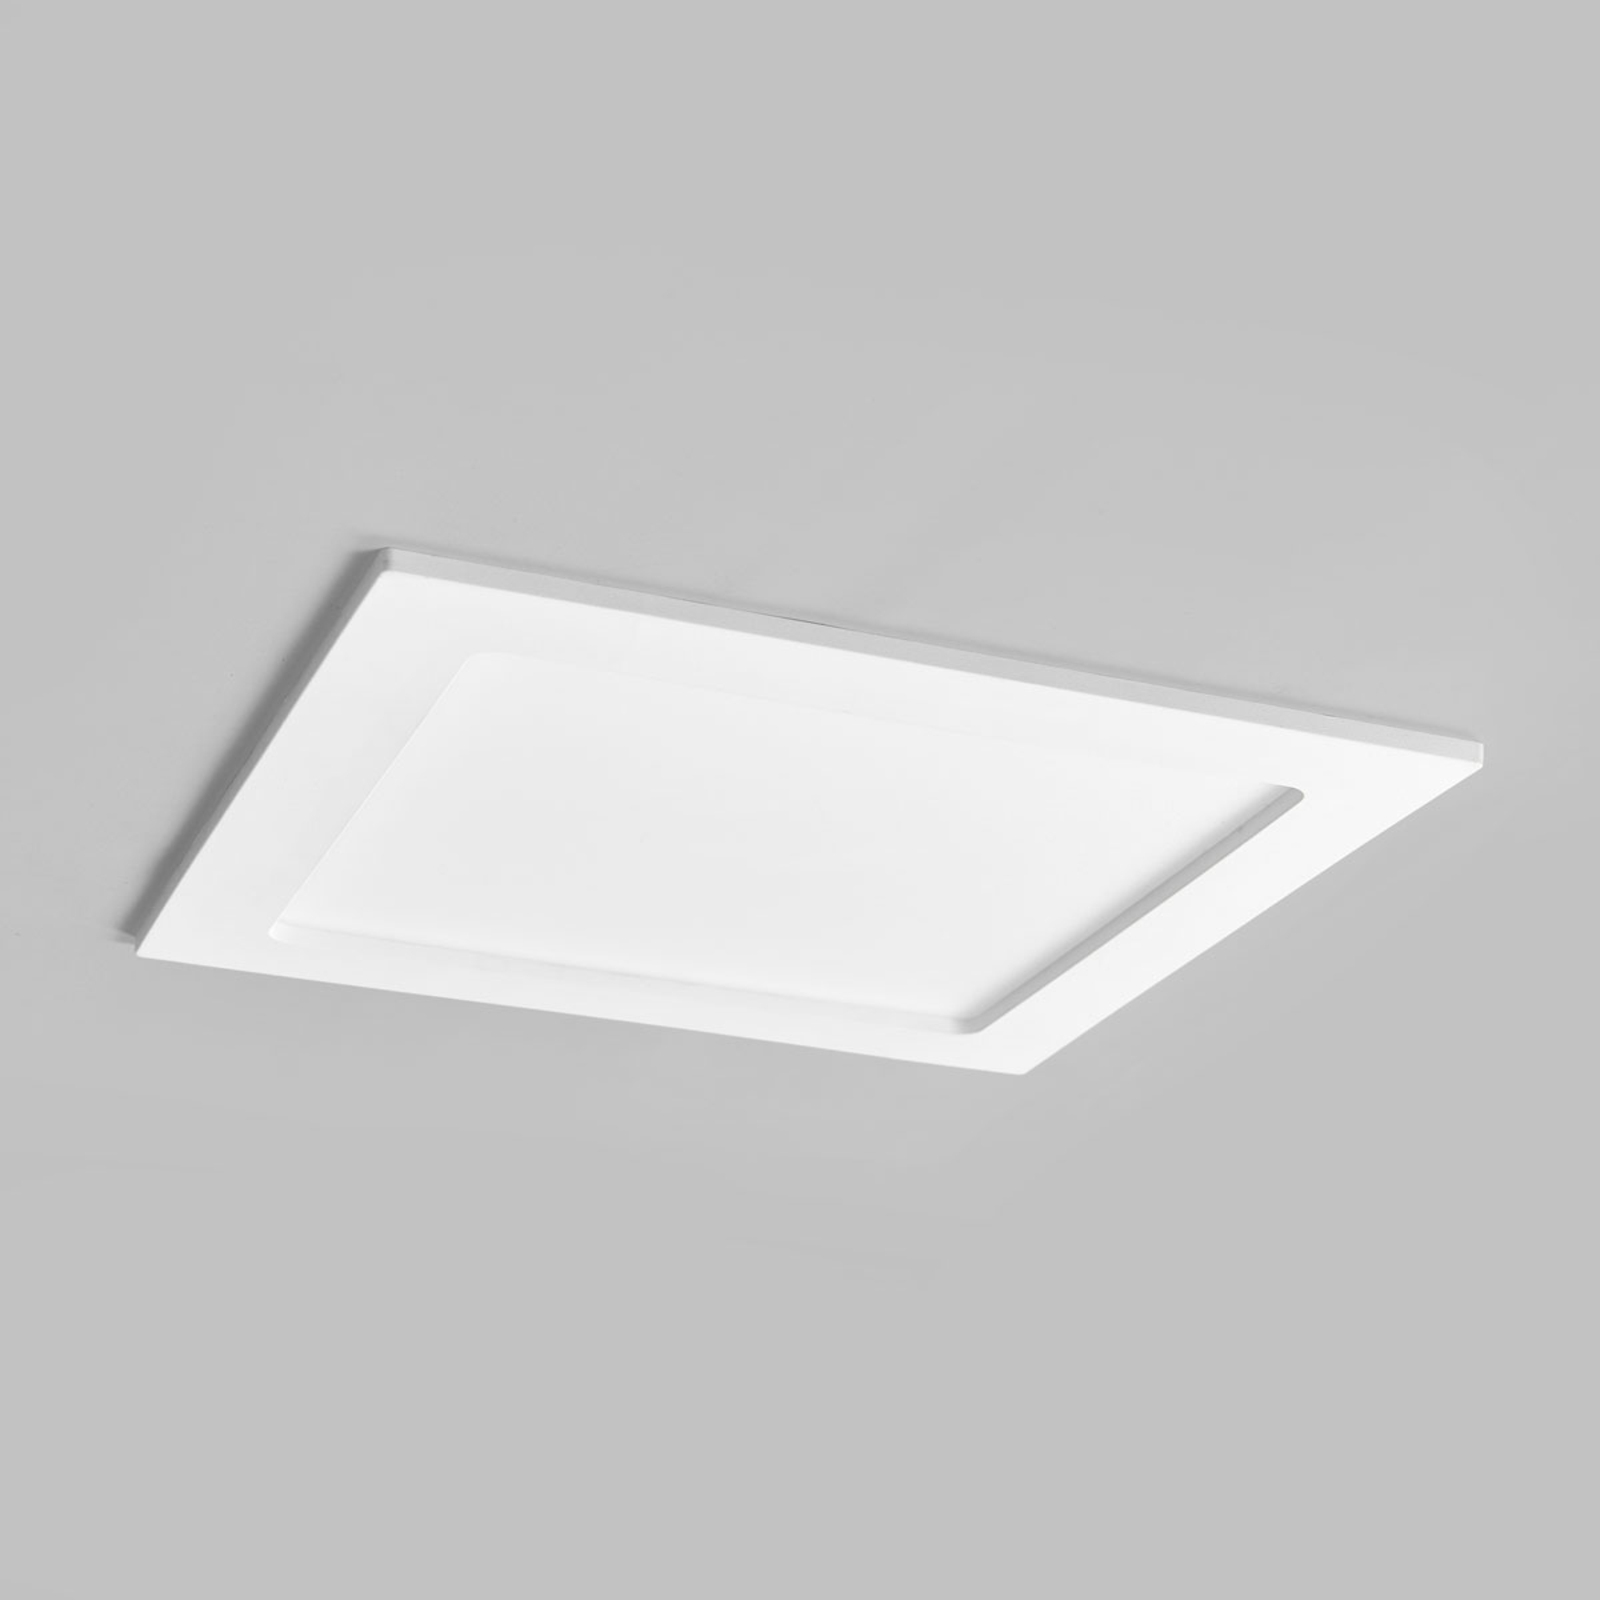 Joki LED downlight white 4000 K angular 22 cm